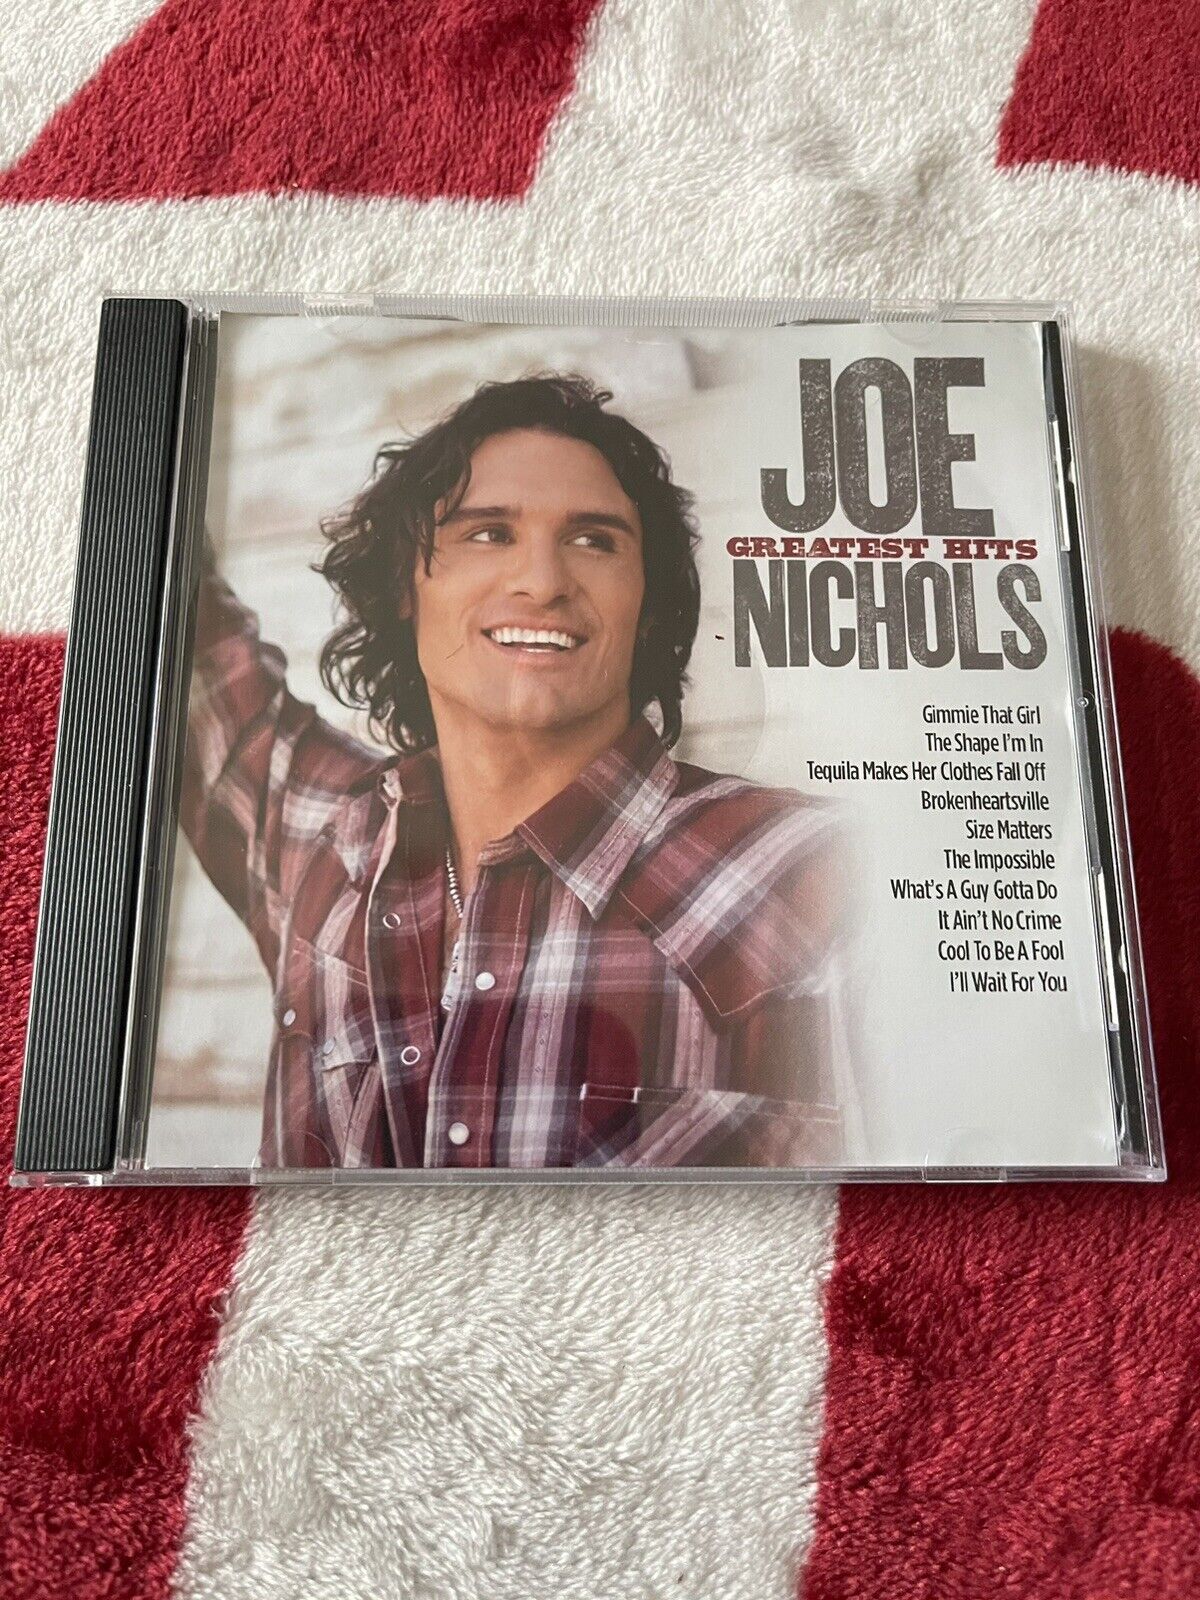 Joe Nichols - Greatest Hits (Audio CD, 2011) TESTED GOOD